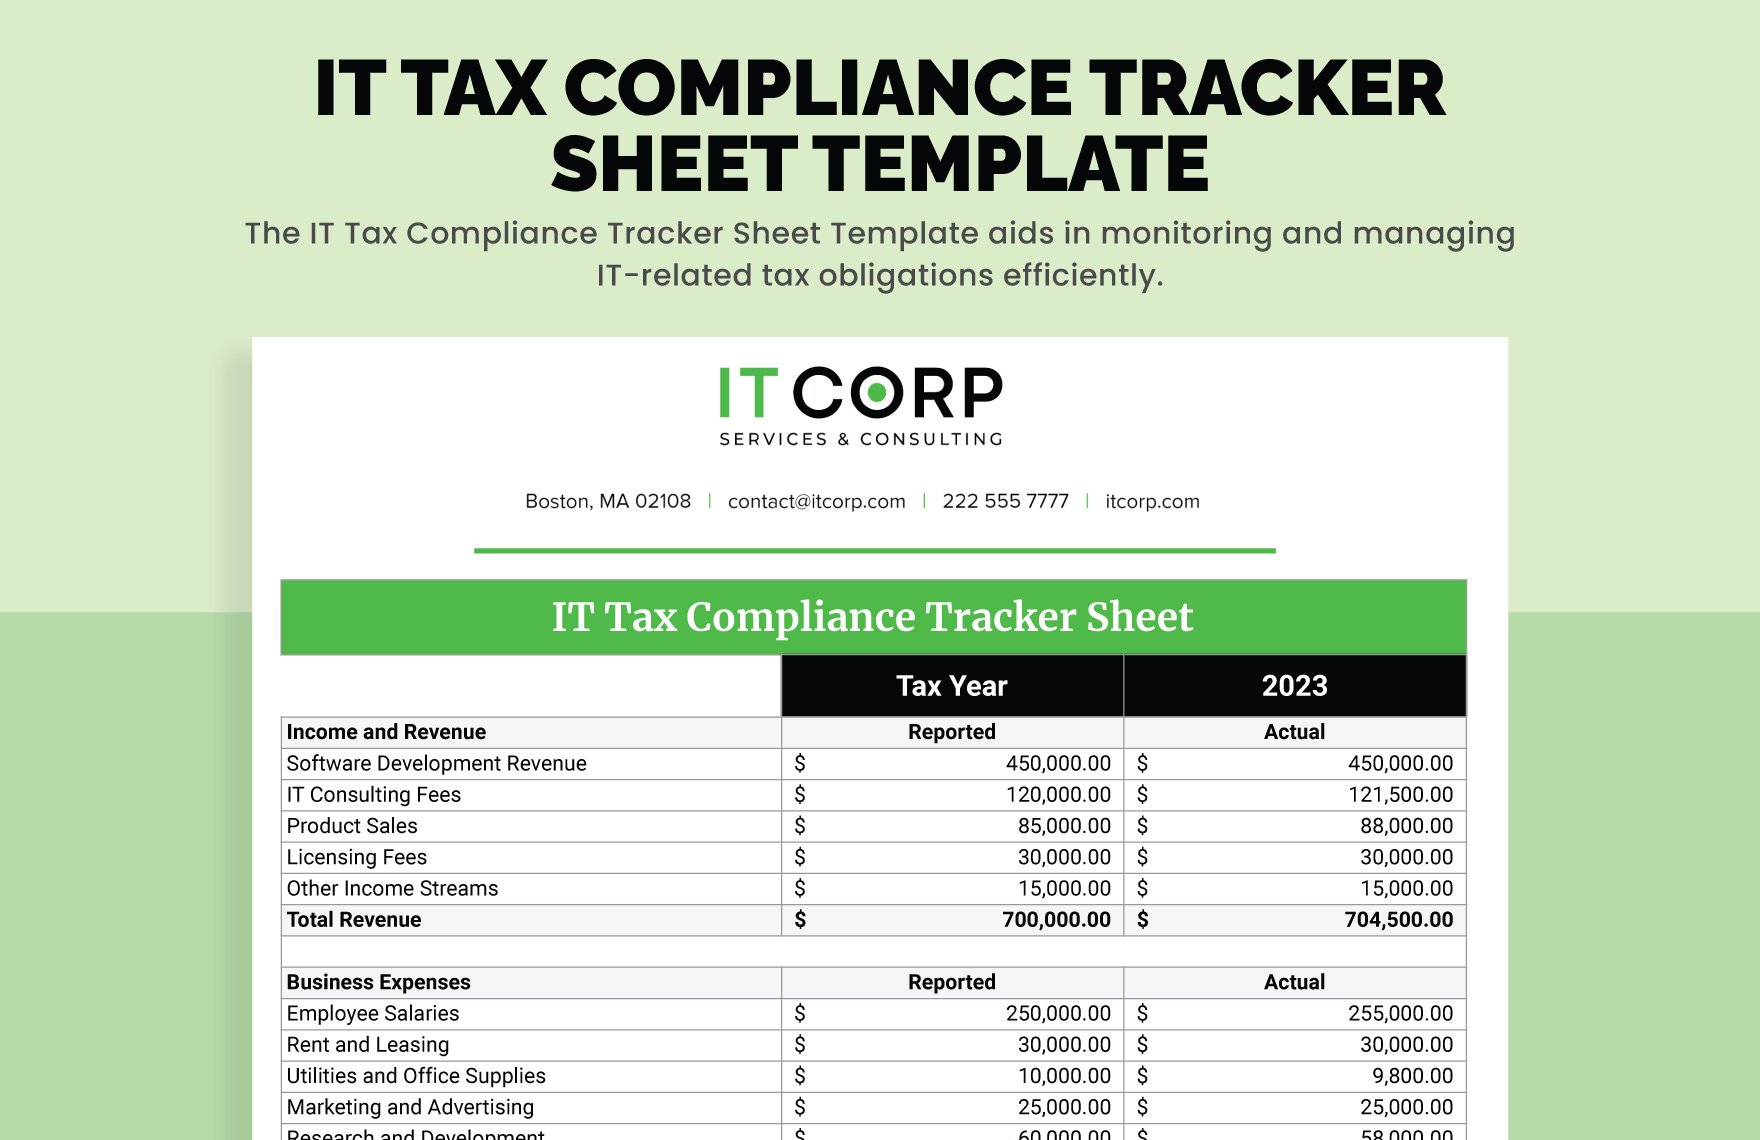 IT Tax Compliance Tracker Sheet Template in Excel, Google Sheets